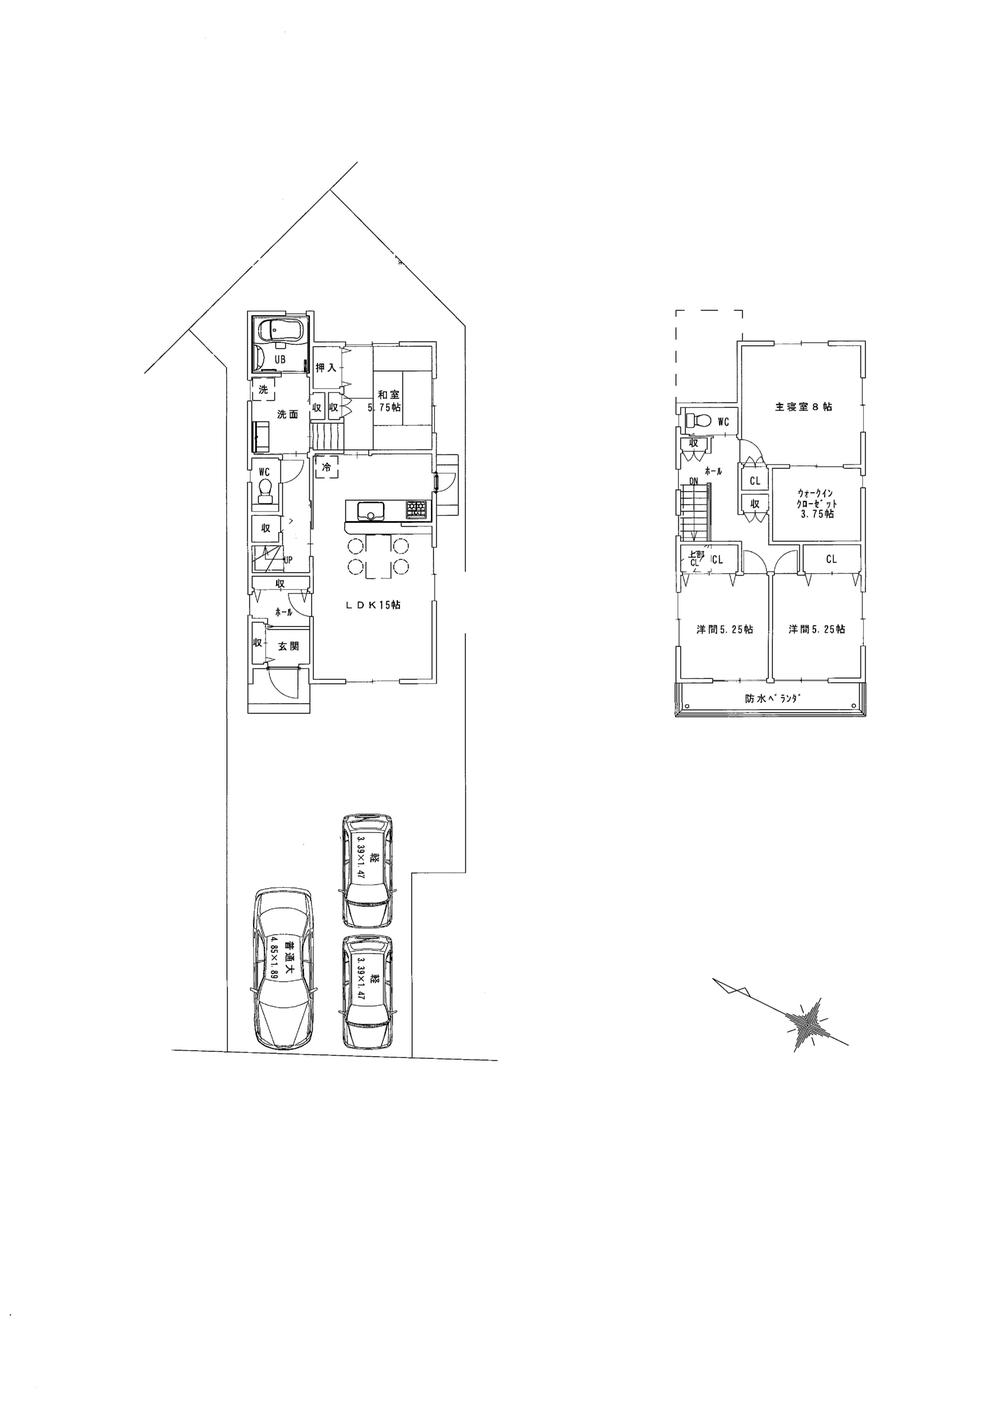 Building plan example (floor plan). Building plan example 4LDK + S, Land price 16,720,000 yen, Land area 162.57 sq m , Building price 22,790,000 yen, Building area 108.48 sq m